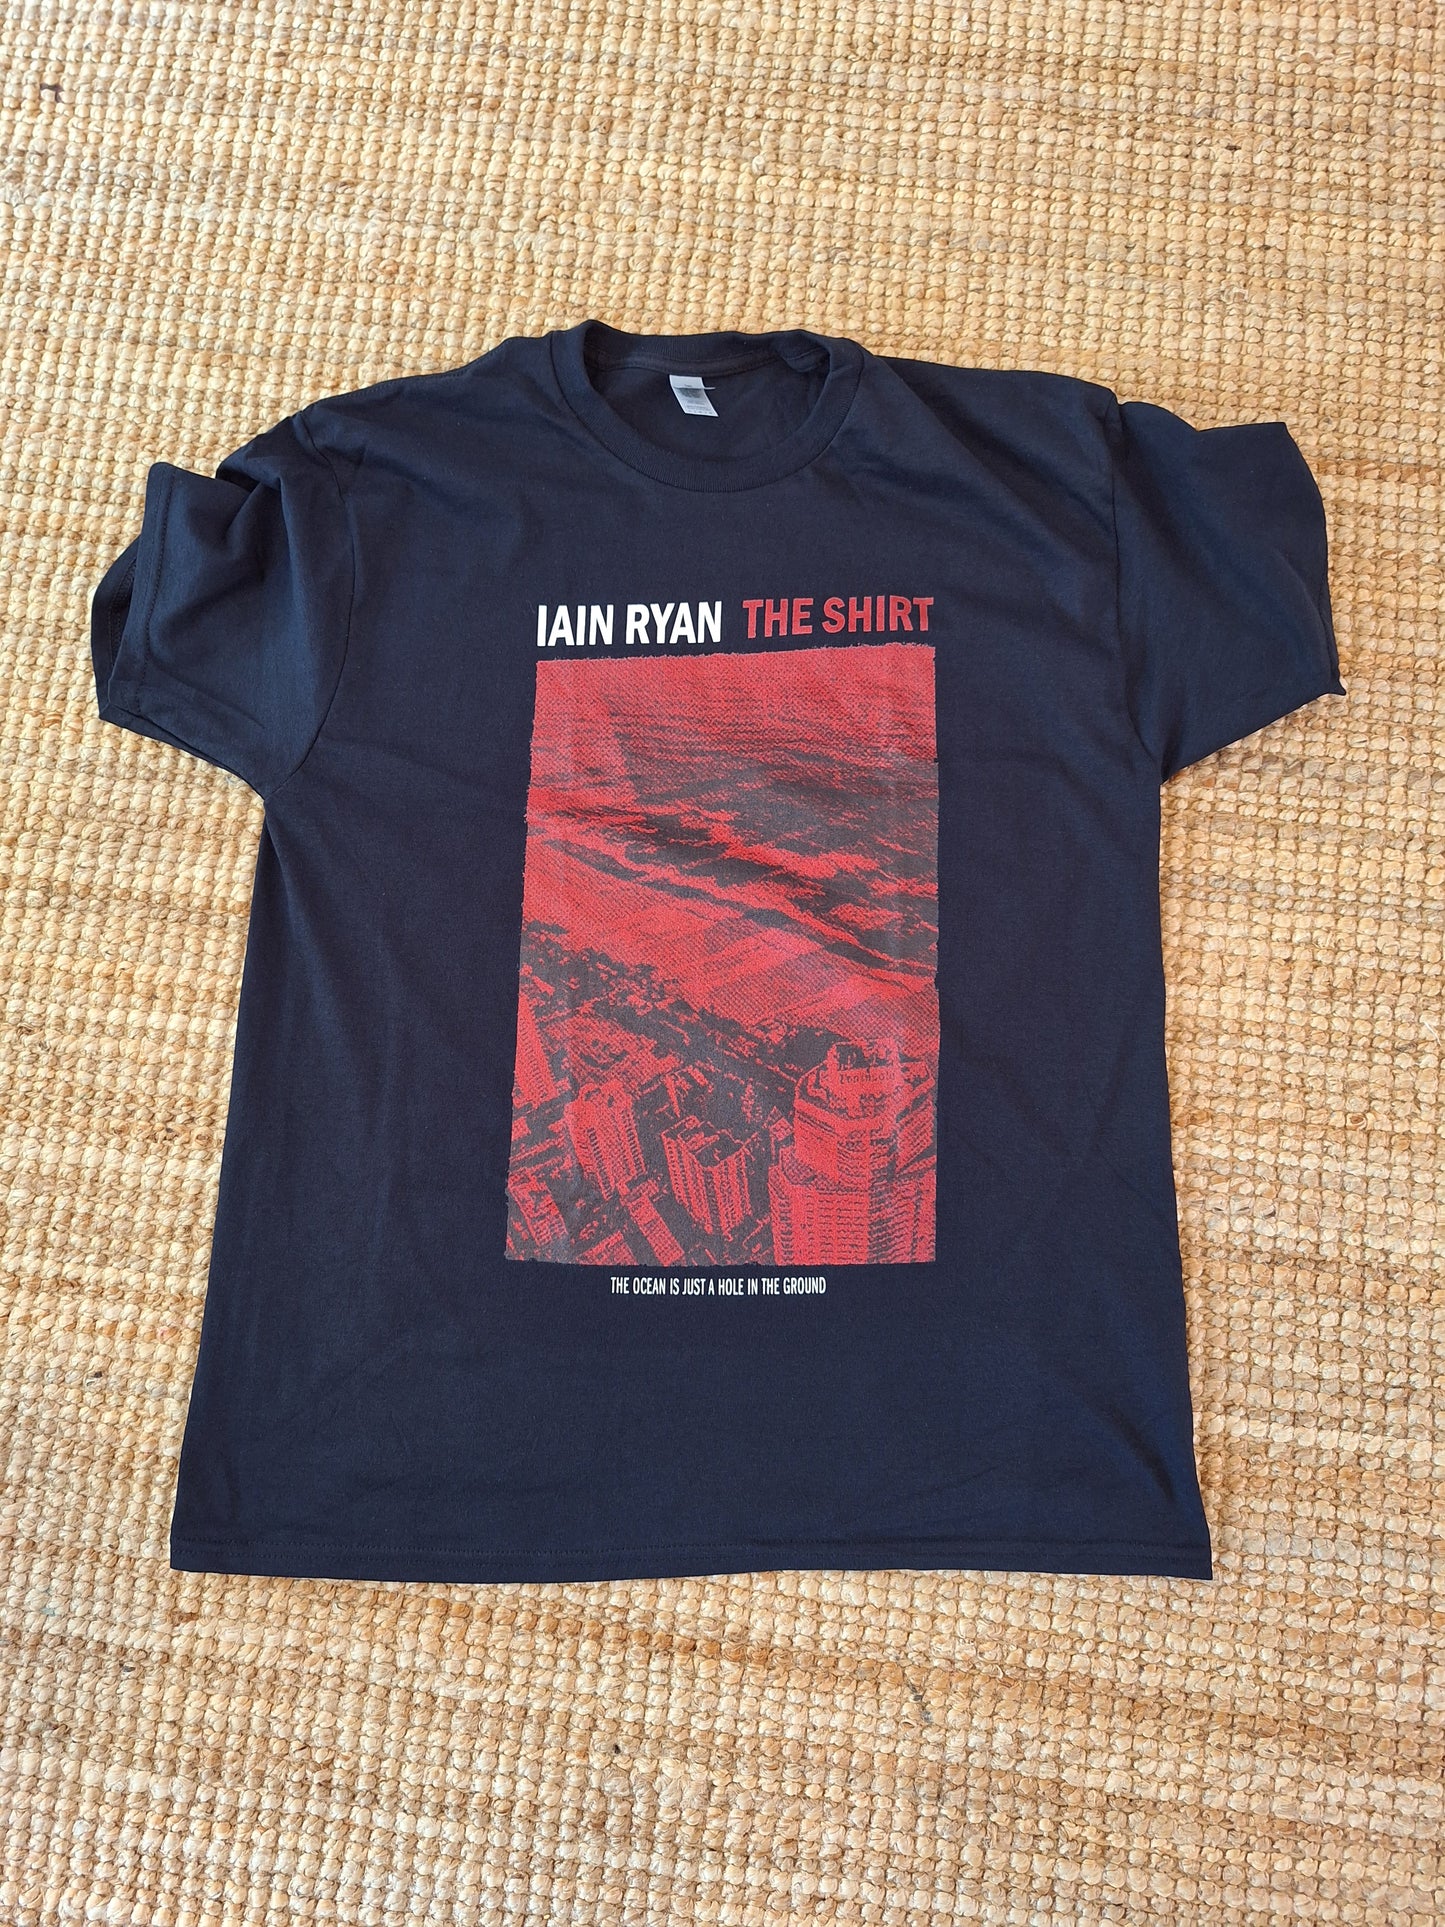 The Shirt by Iain Ryan